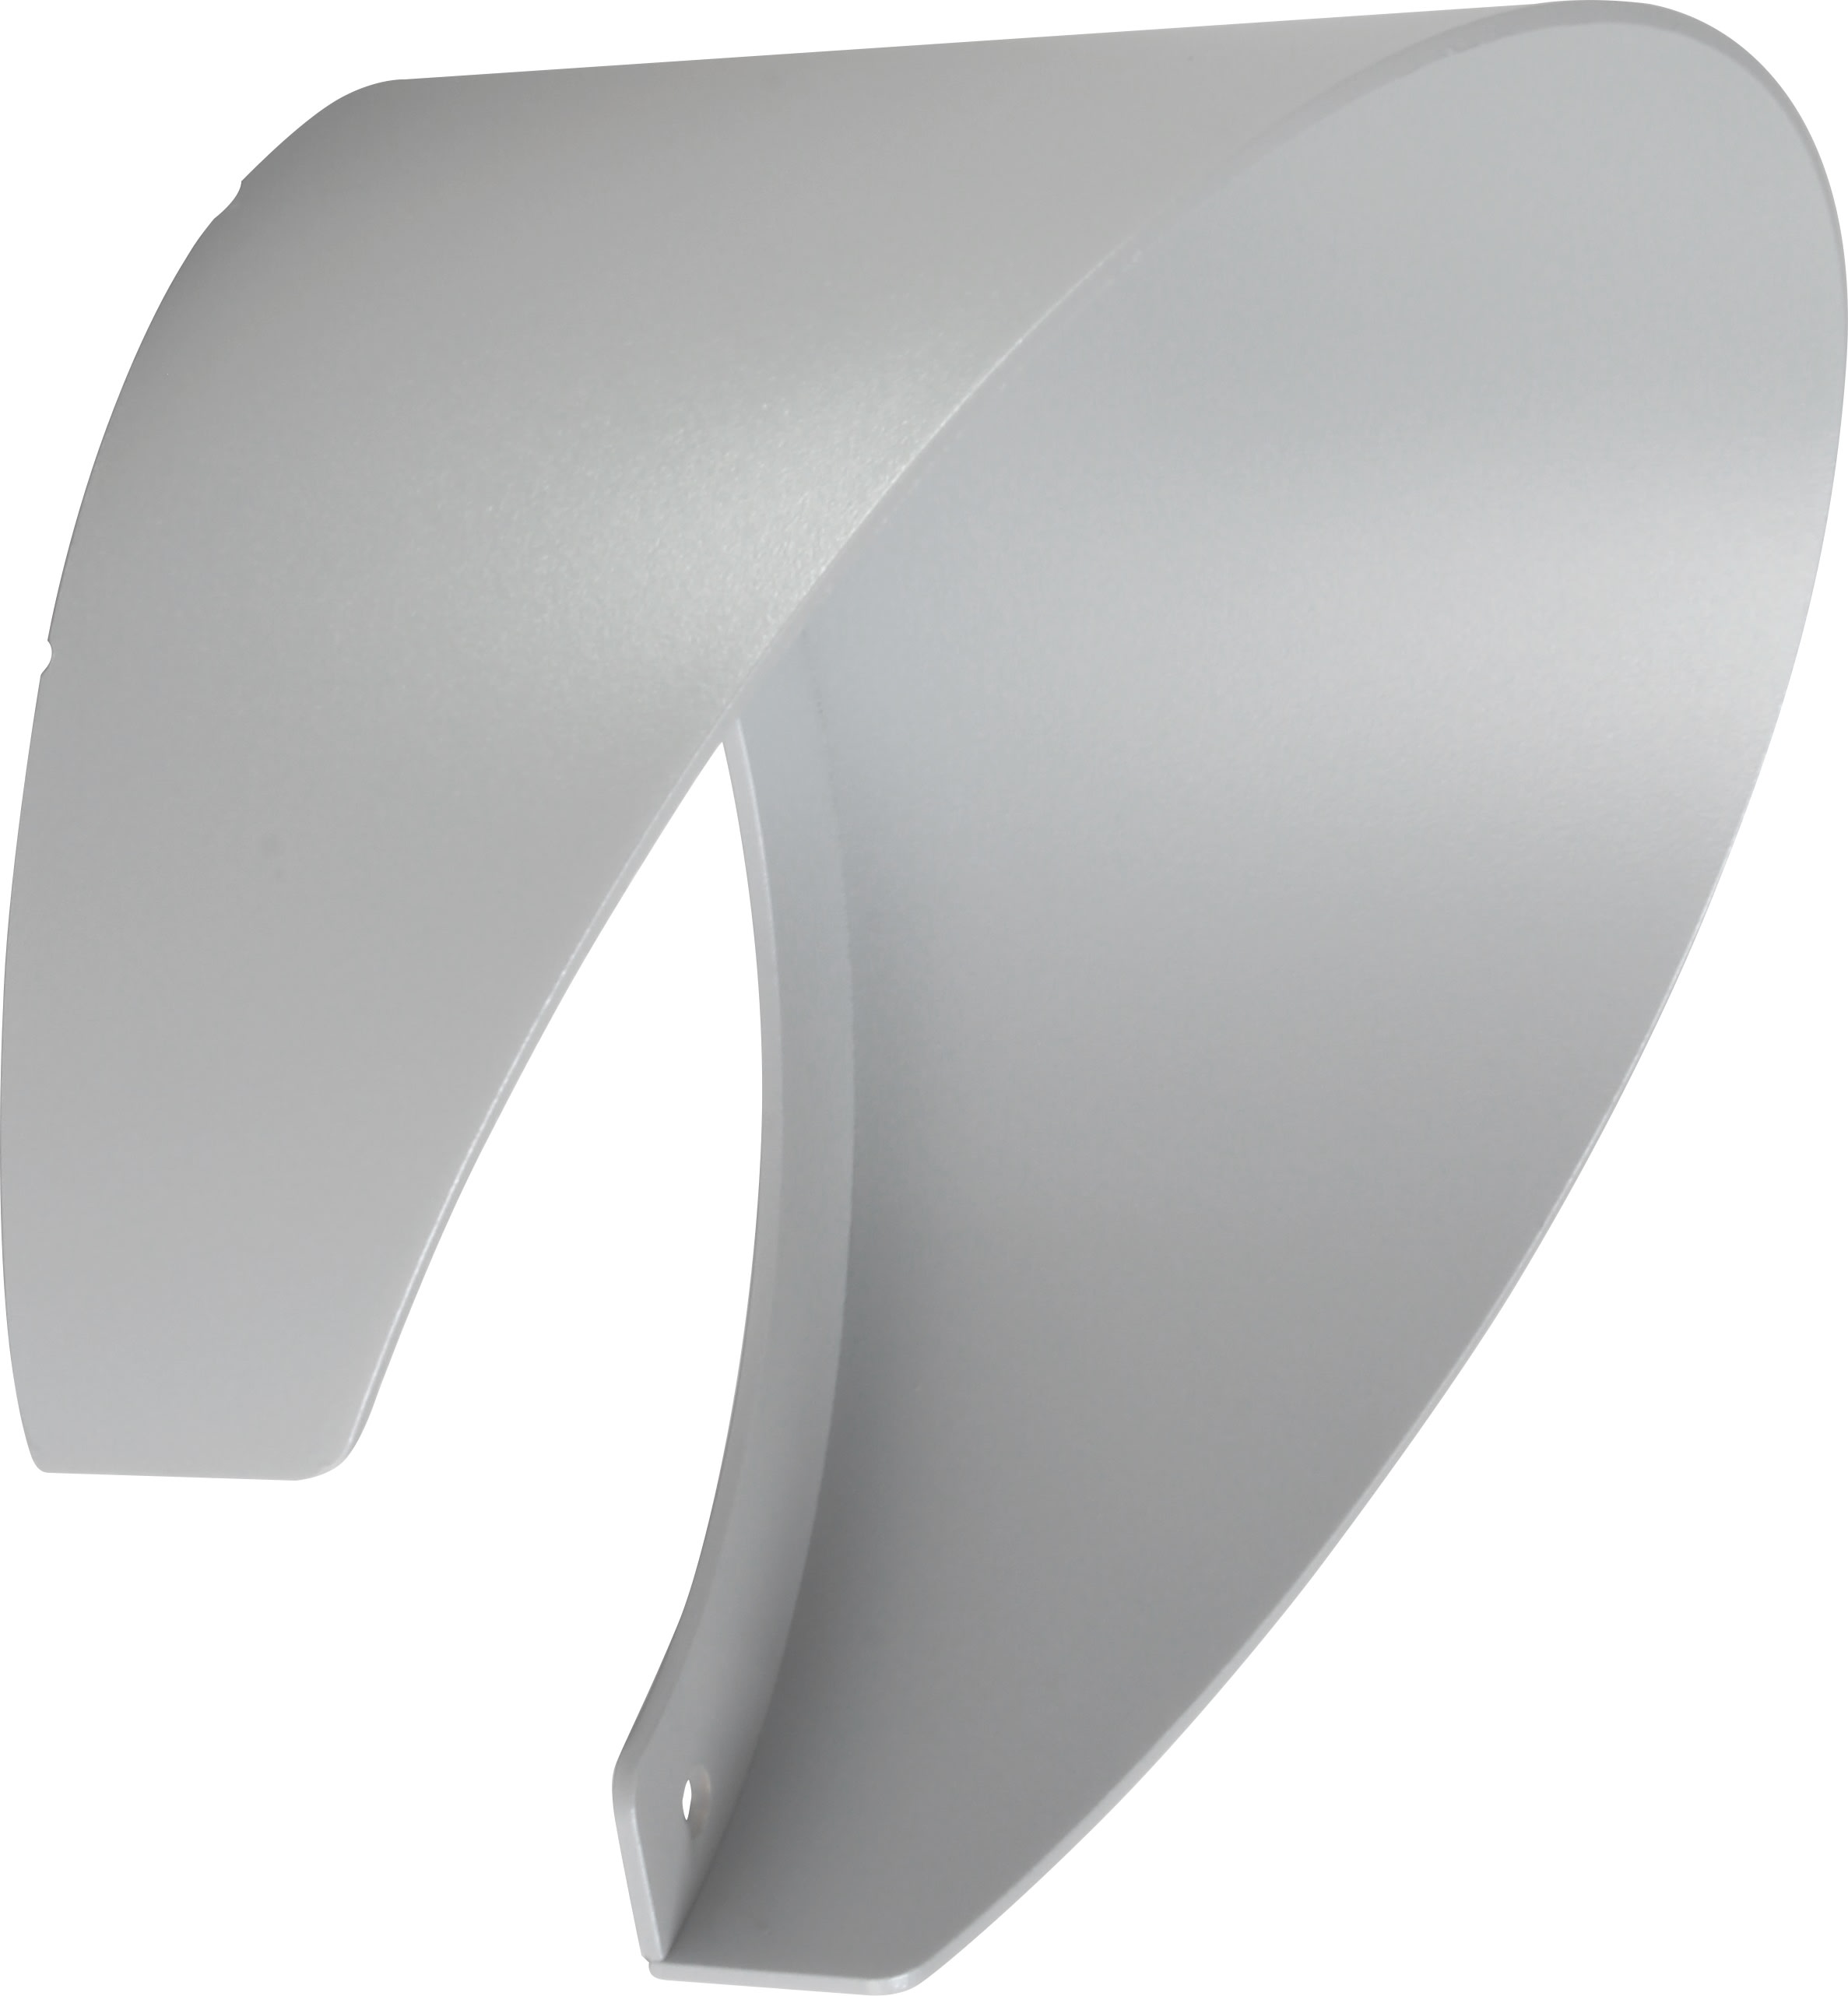 SG Lighting - WAX visière de protection en aluminium gris